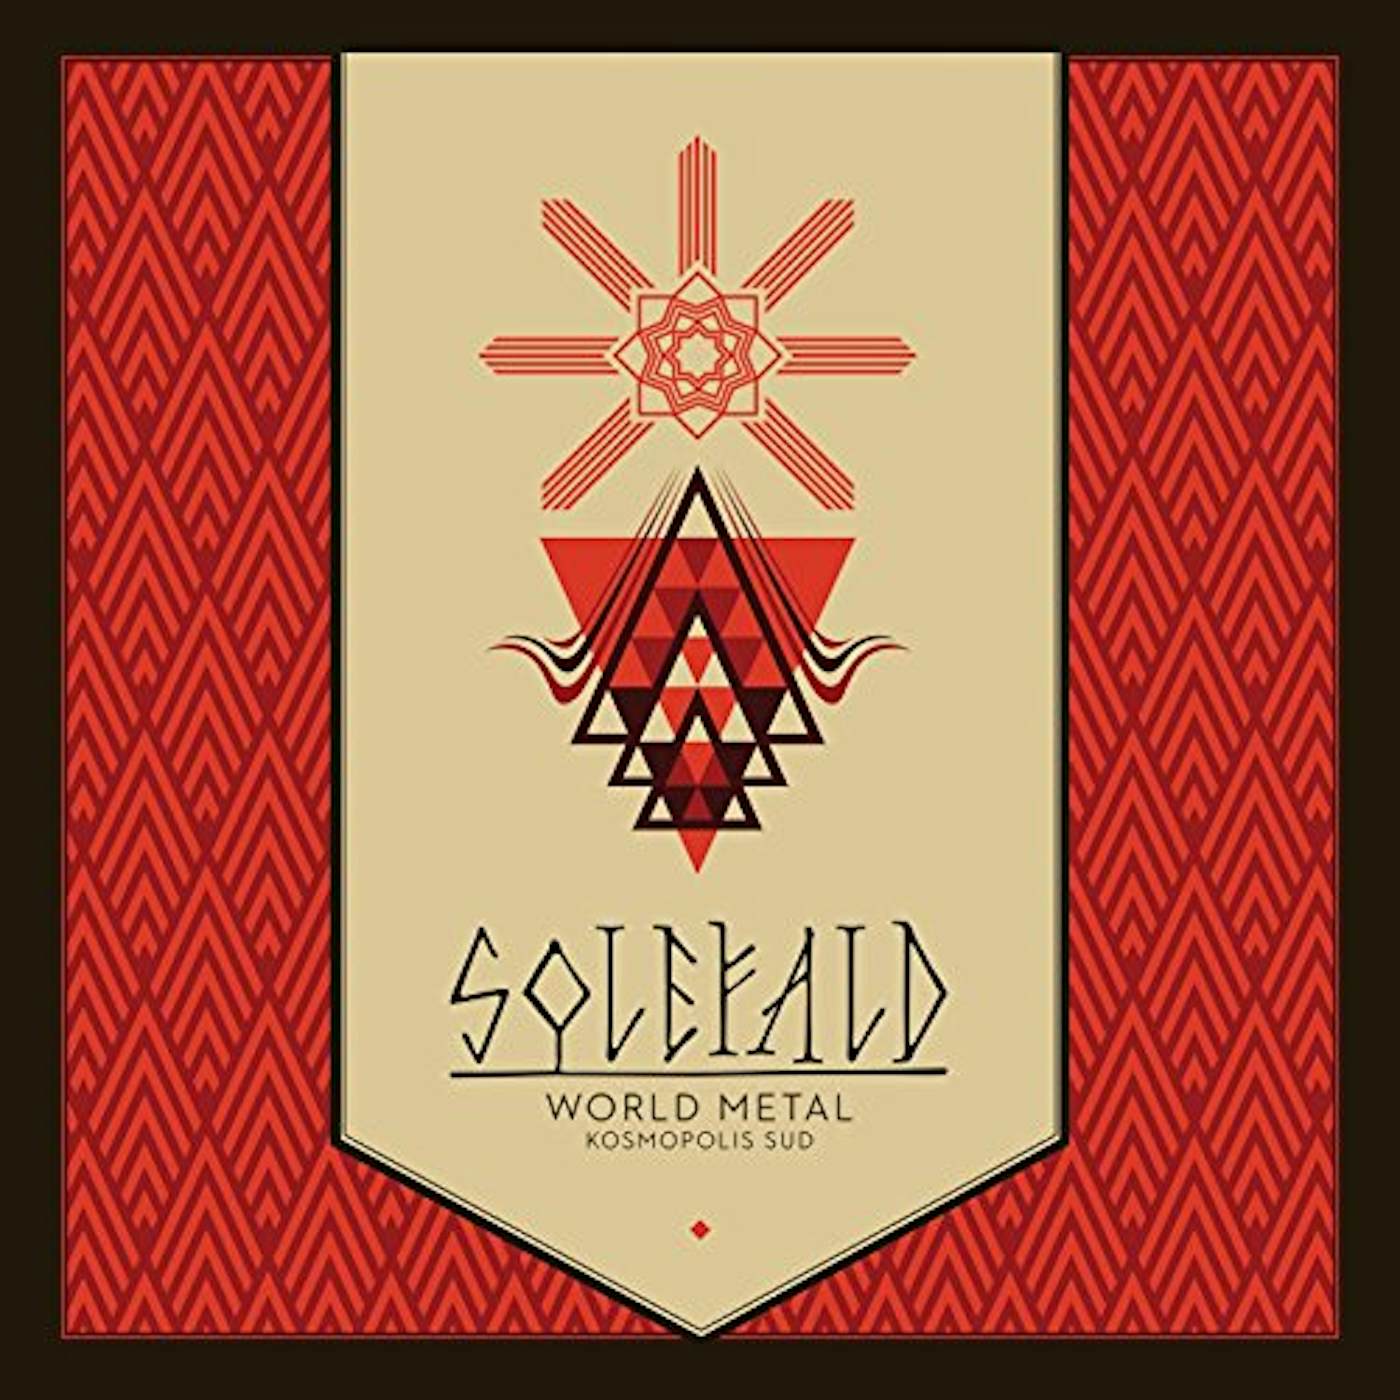 Solefald WORLD METAL. KOSMOPOLIS SUD. Vinyl Record - UK Release